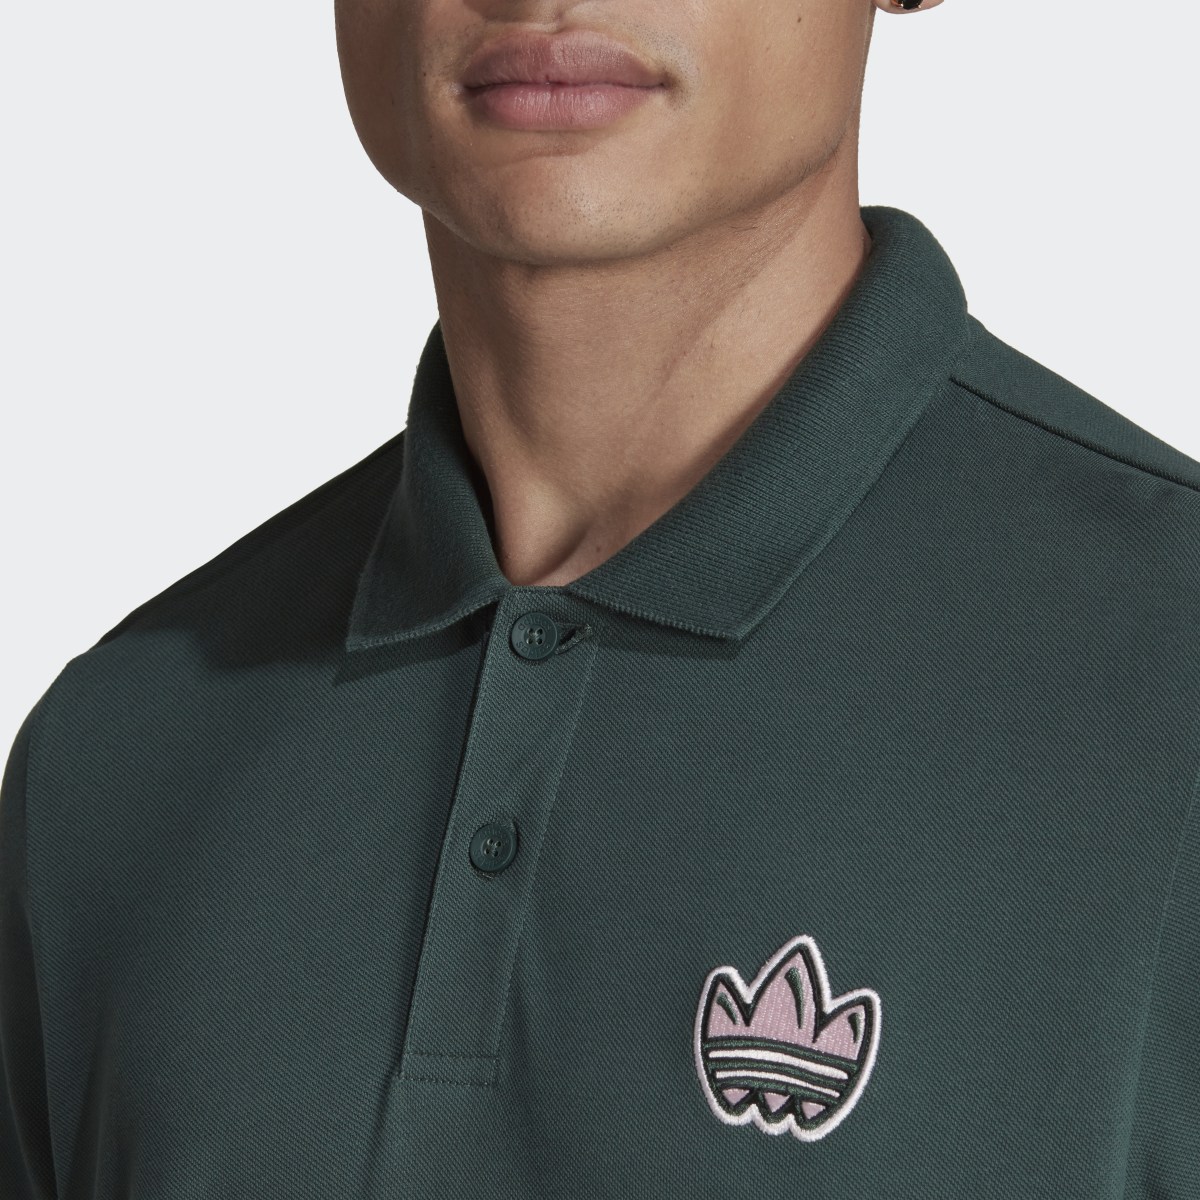 Adidas Graphics Campus Long Sleeve Polo Shirt. 7